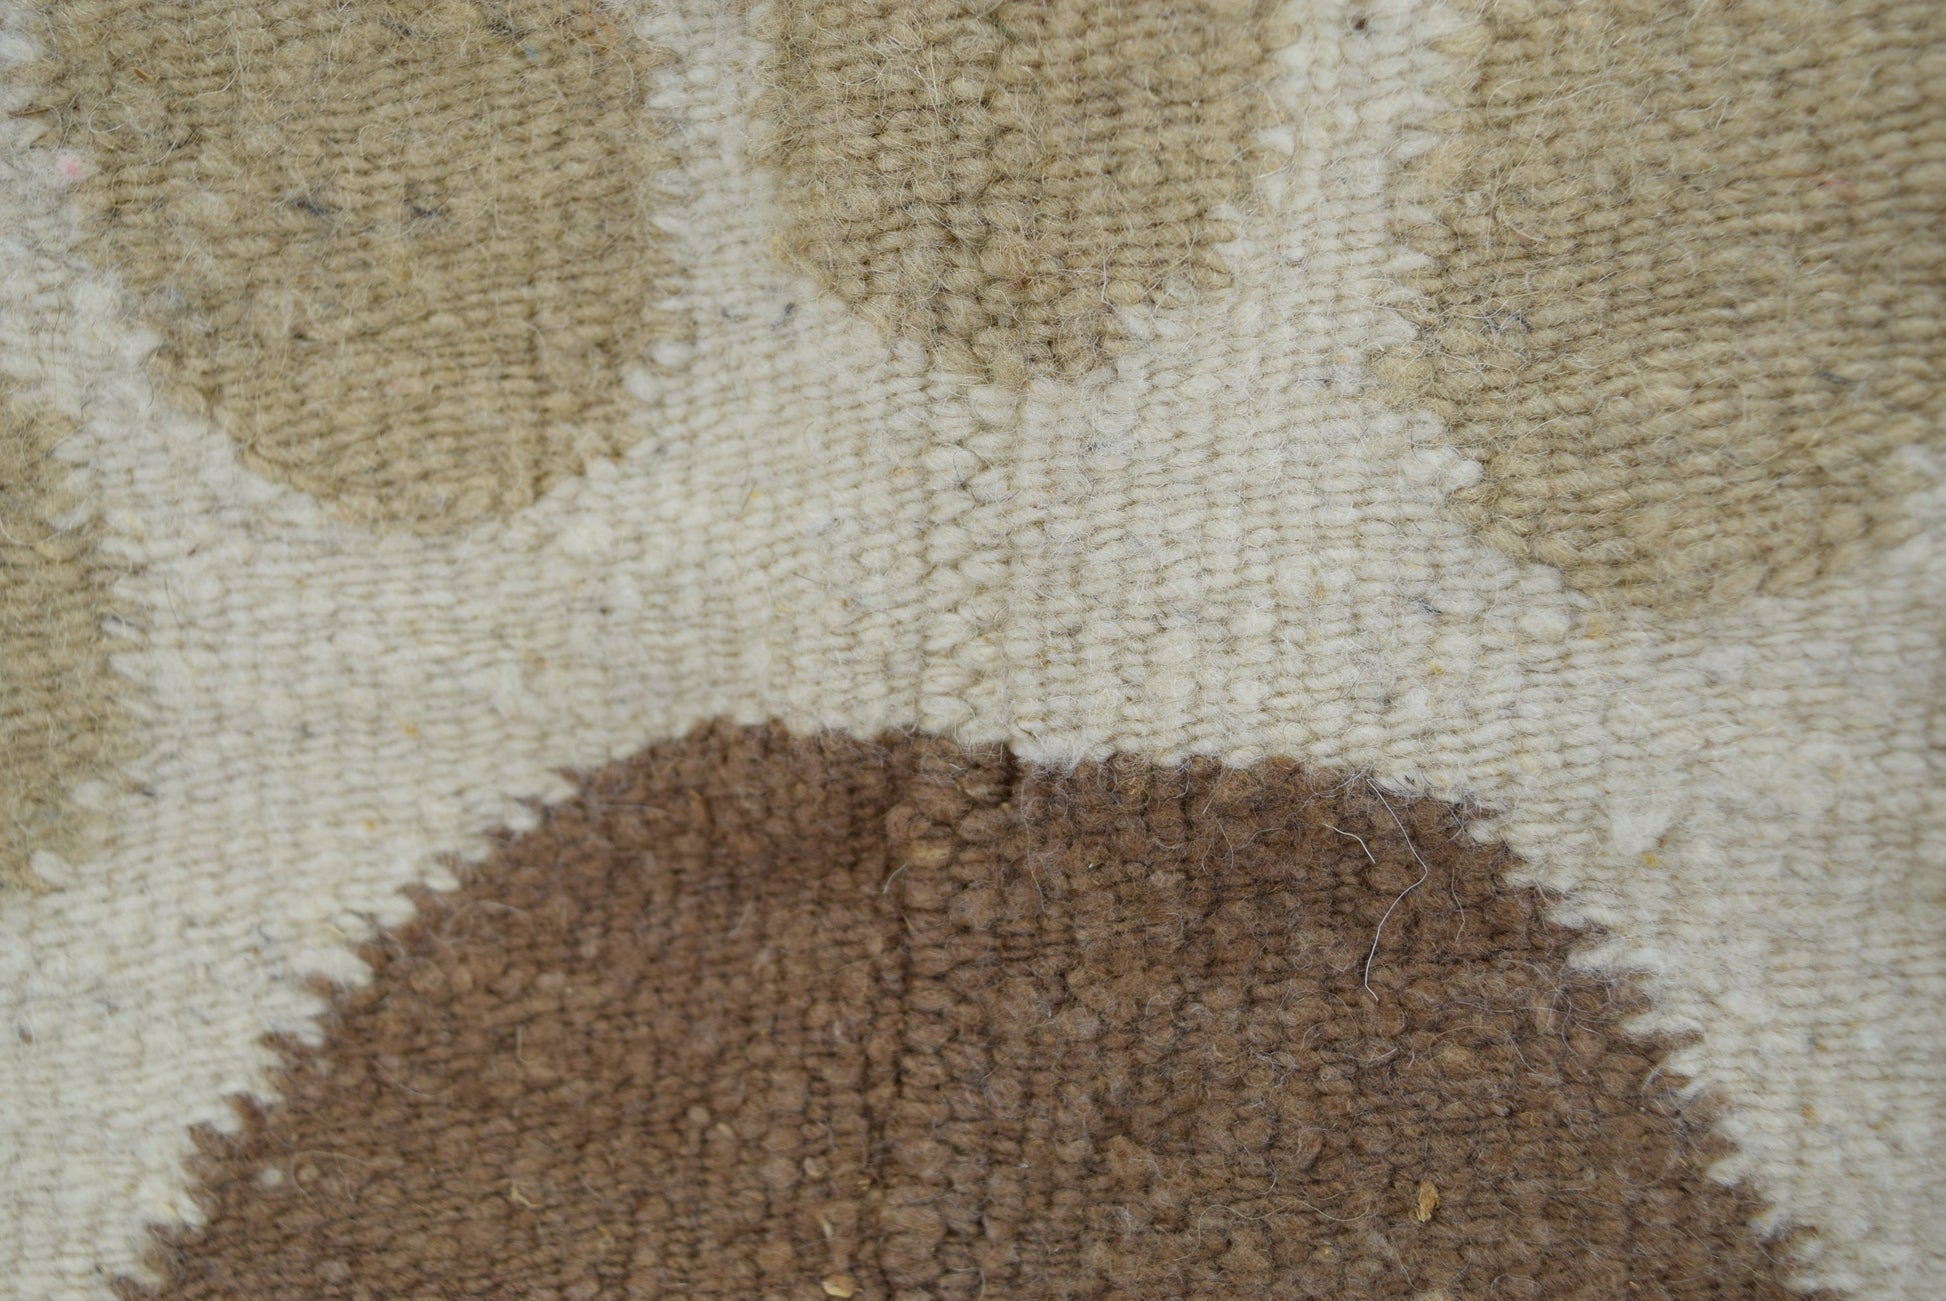 Wool Area Rug Natural Browns Greys Center Medallion Geometric Fringed vintage